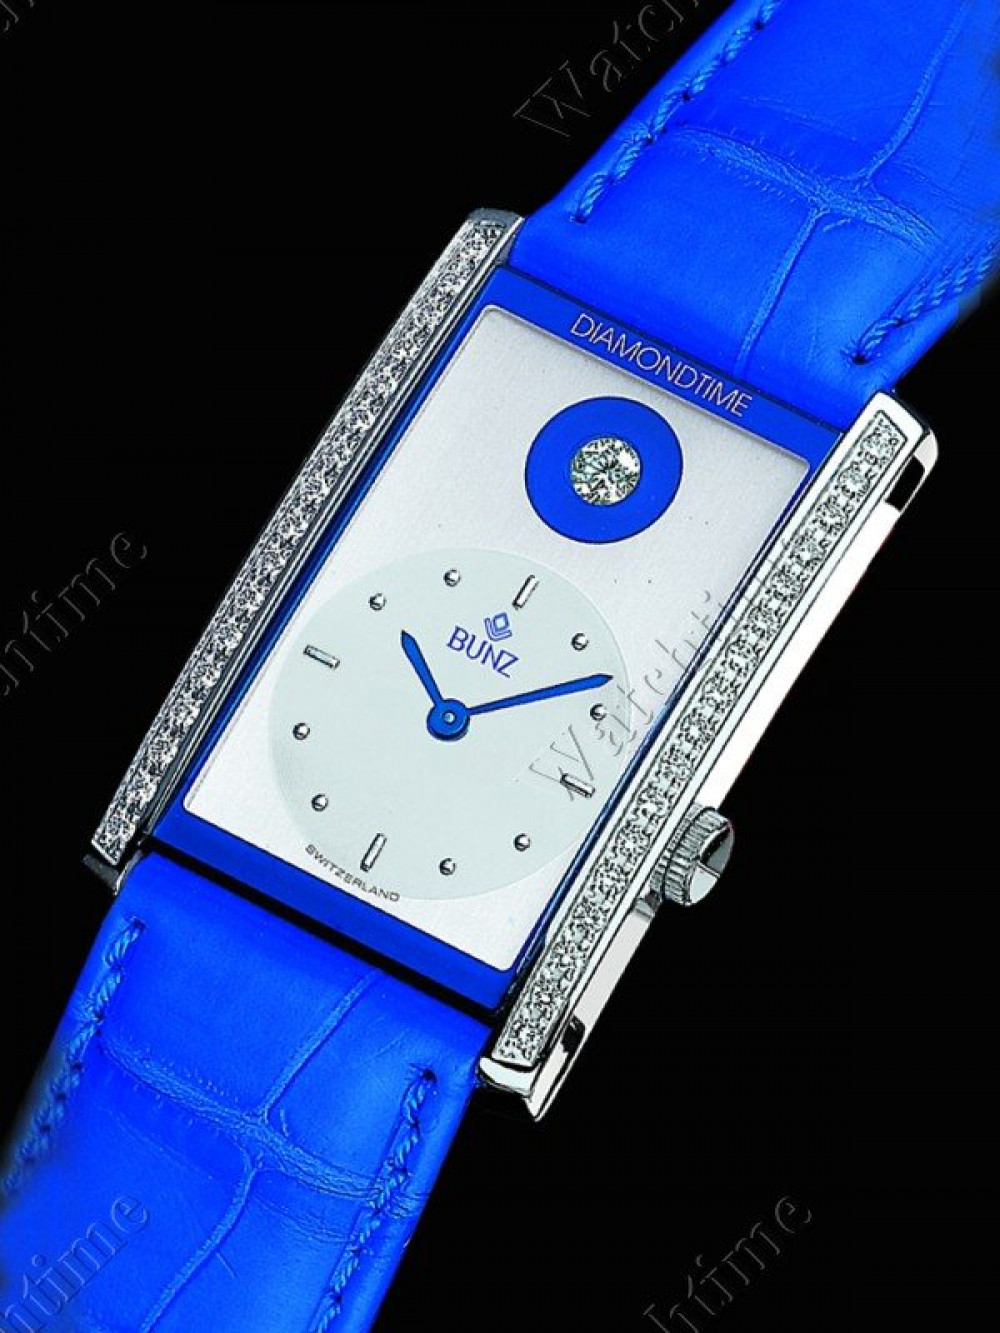 Zegarek firmy Bunz, model Diamond Time